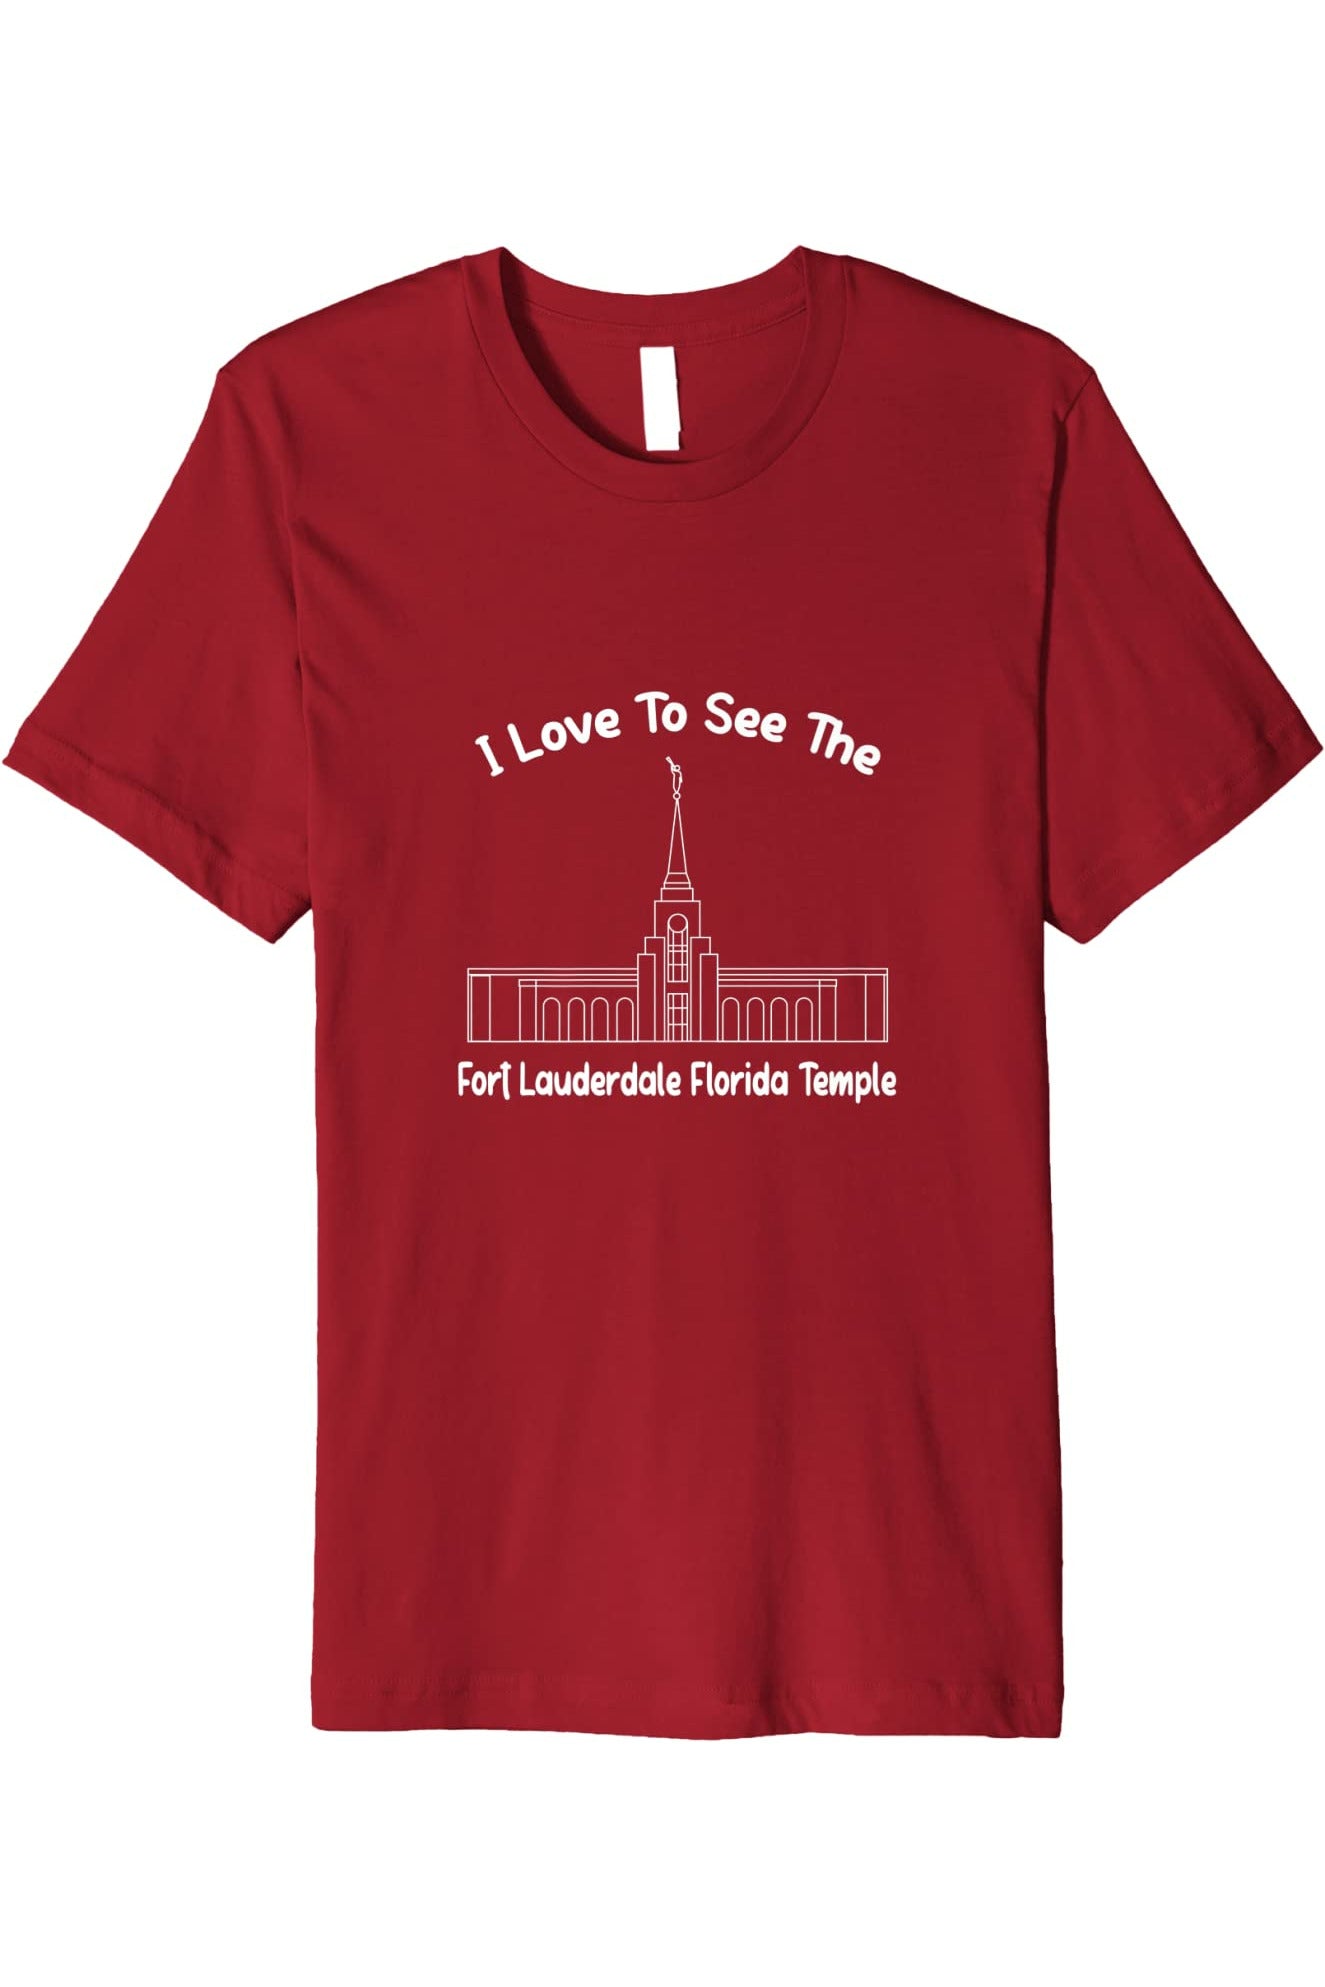 Ft Lauderdale Florida Temple T-Shirt - Premium - Primary Style (English) US